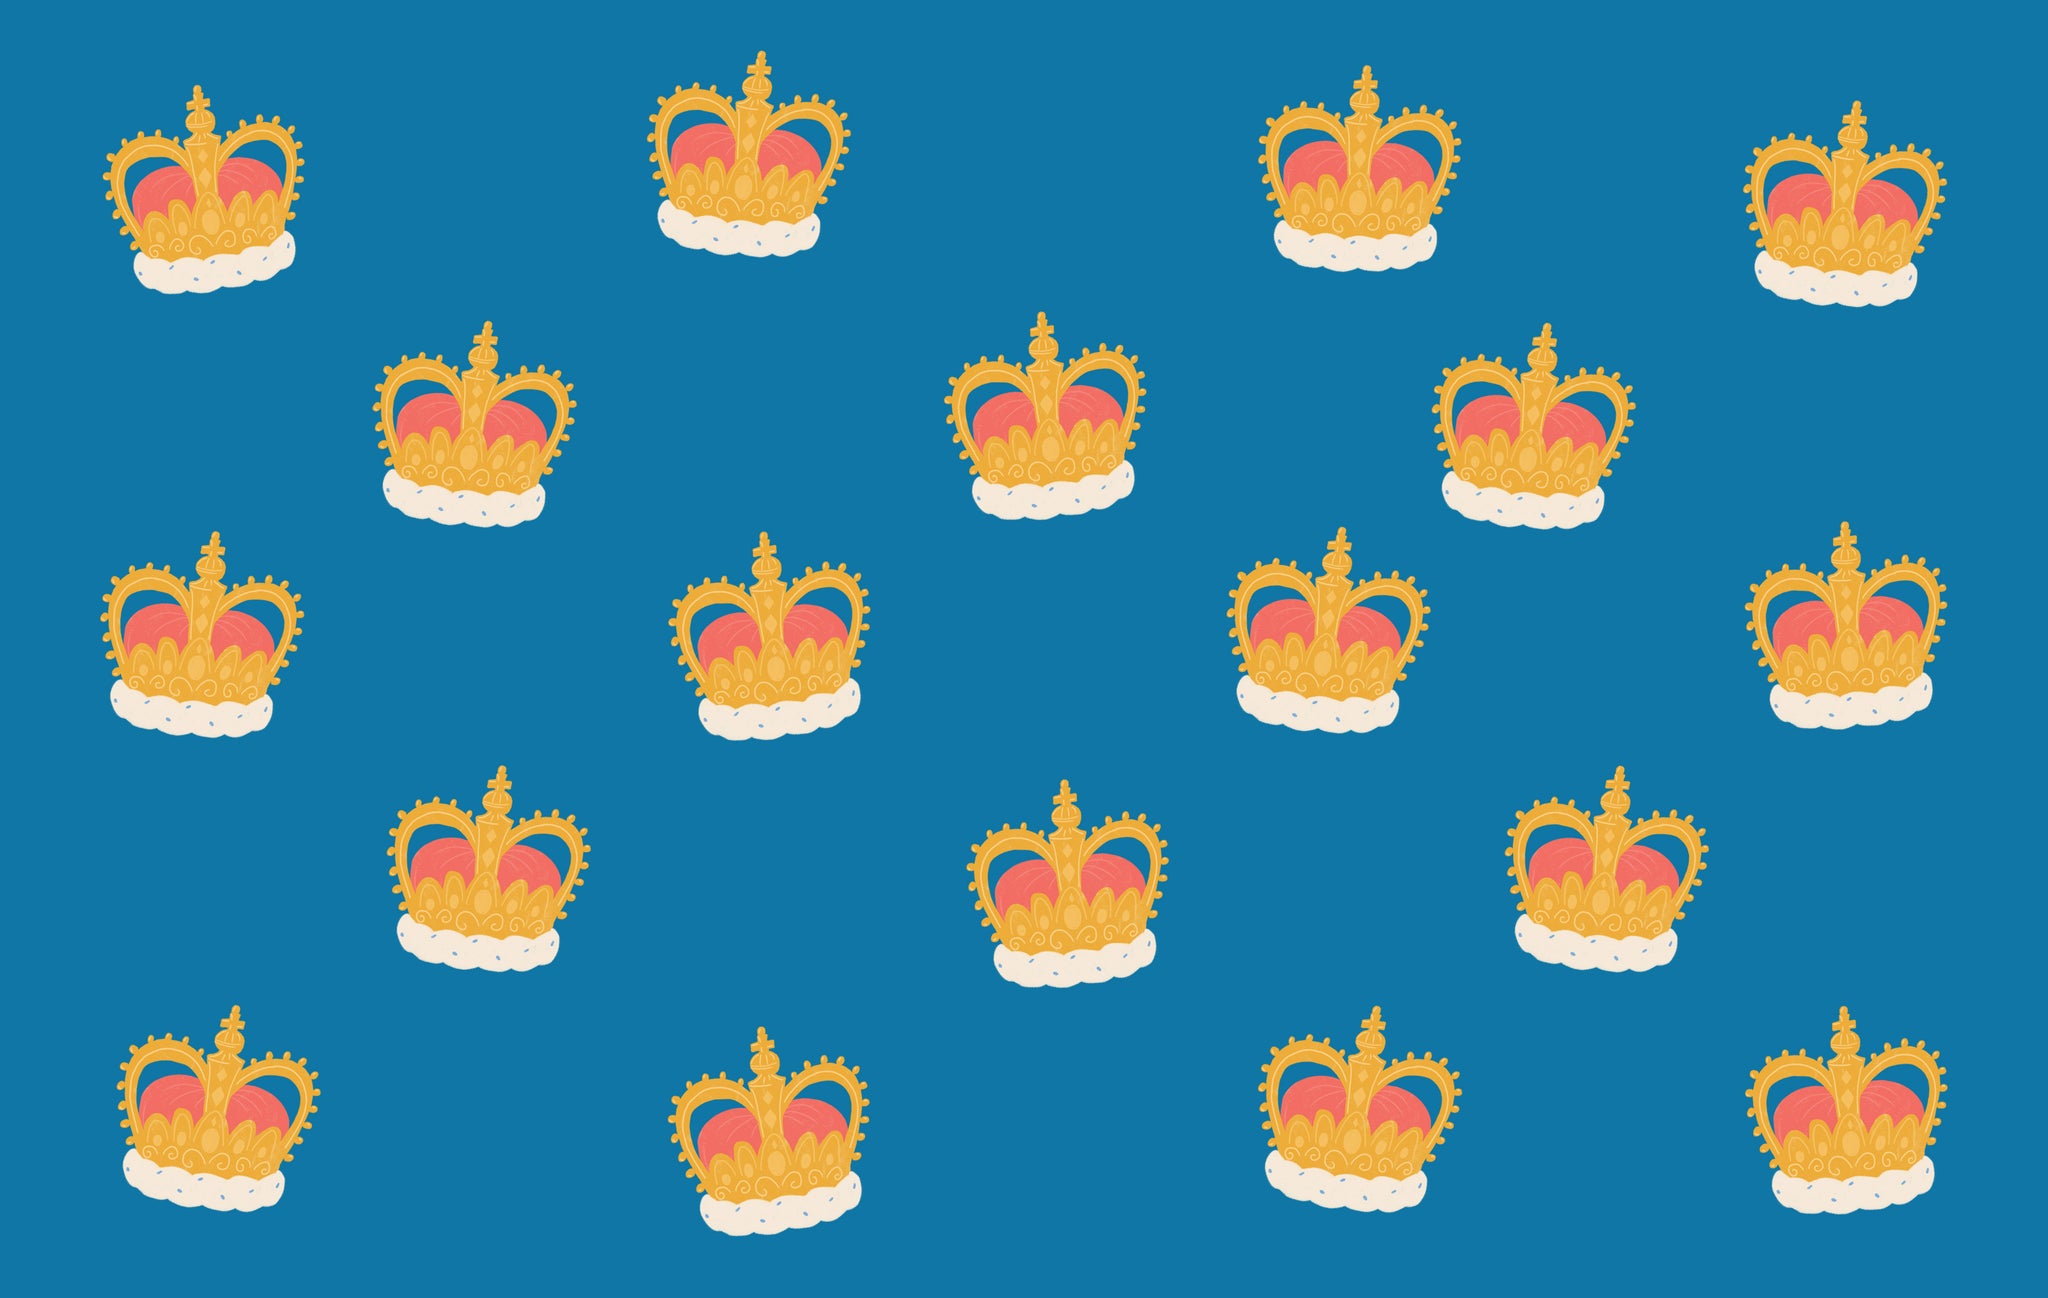 Royal crown patterned wallpaper for desktop | Raspberry Blossom